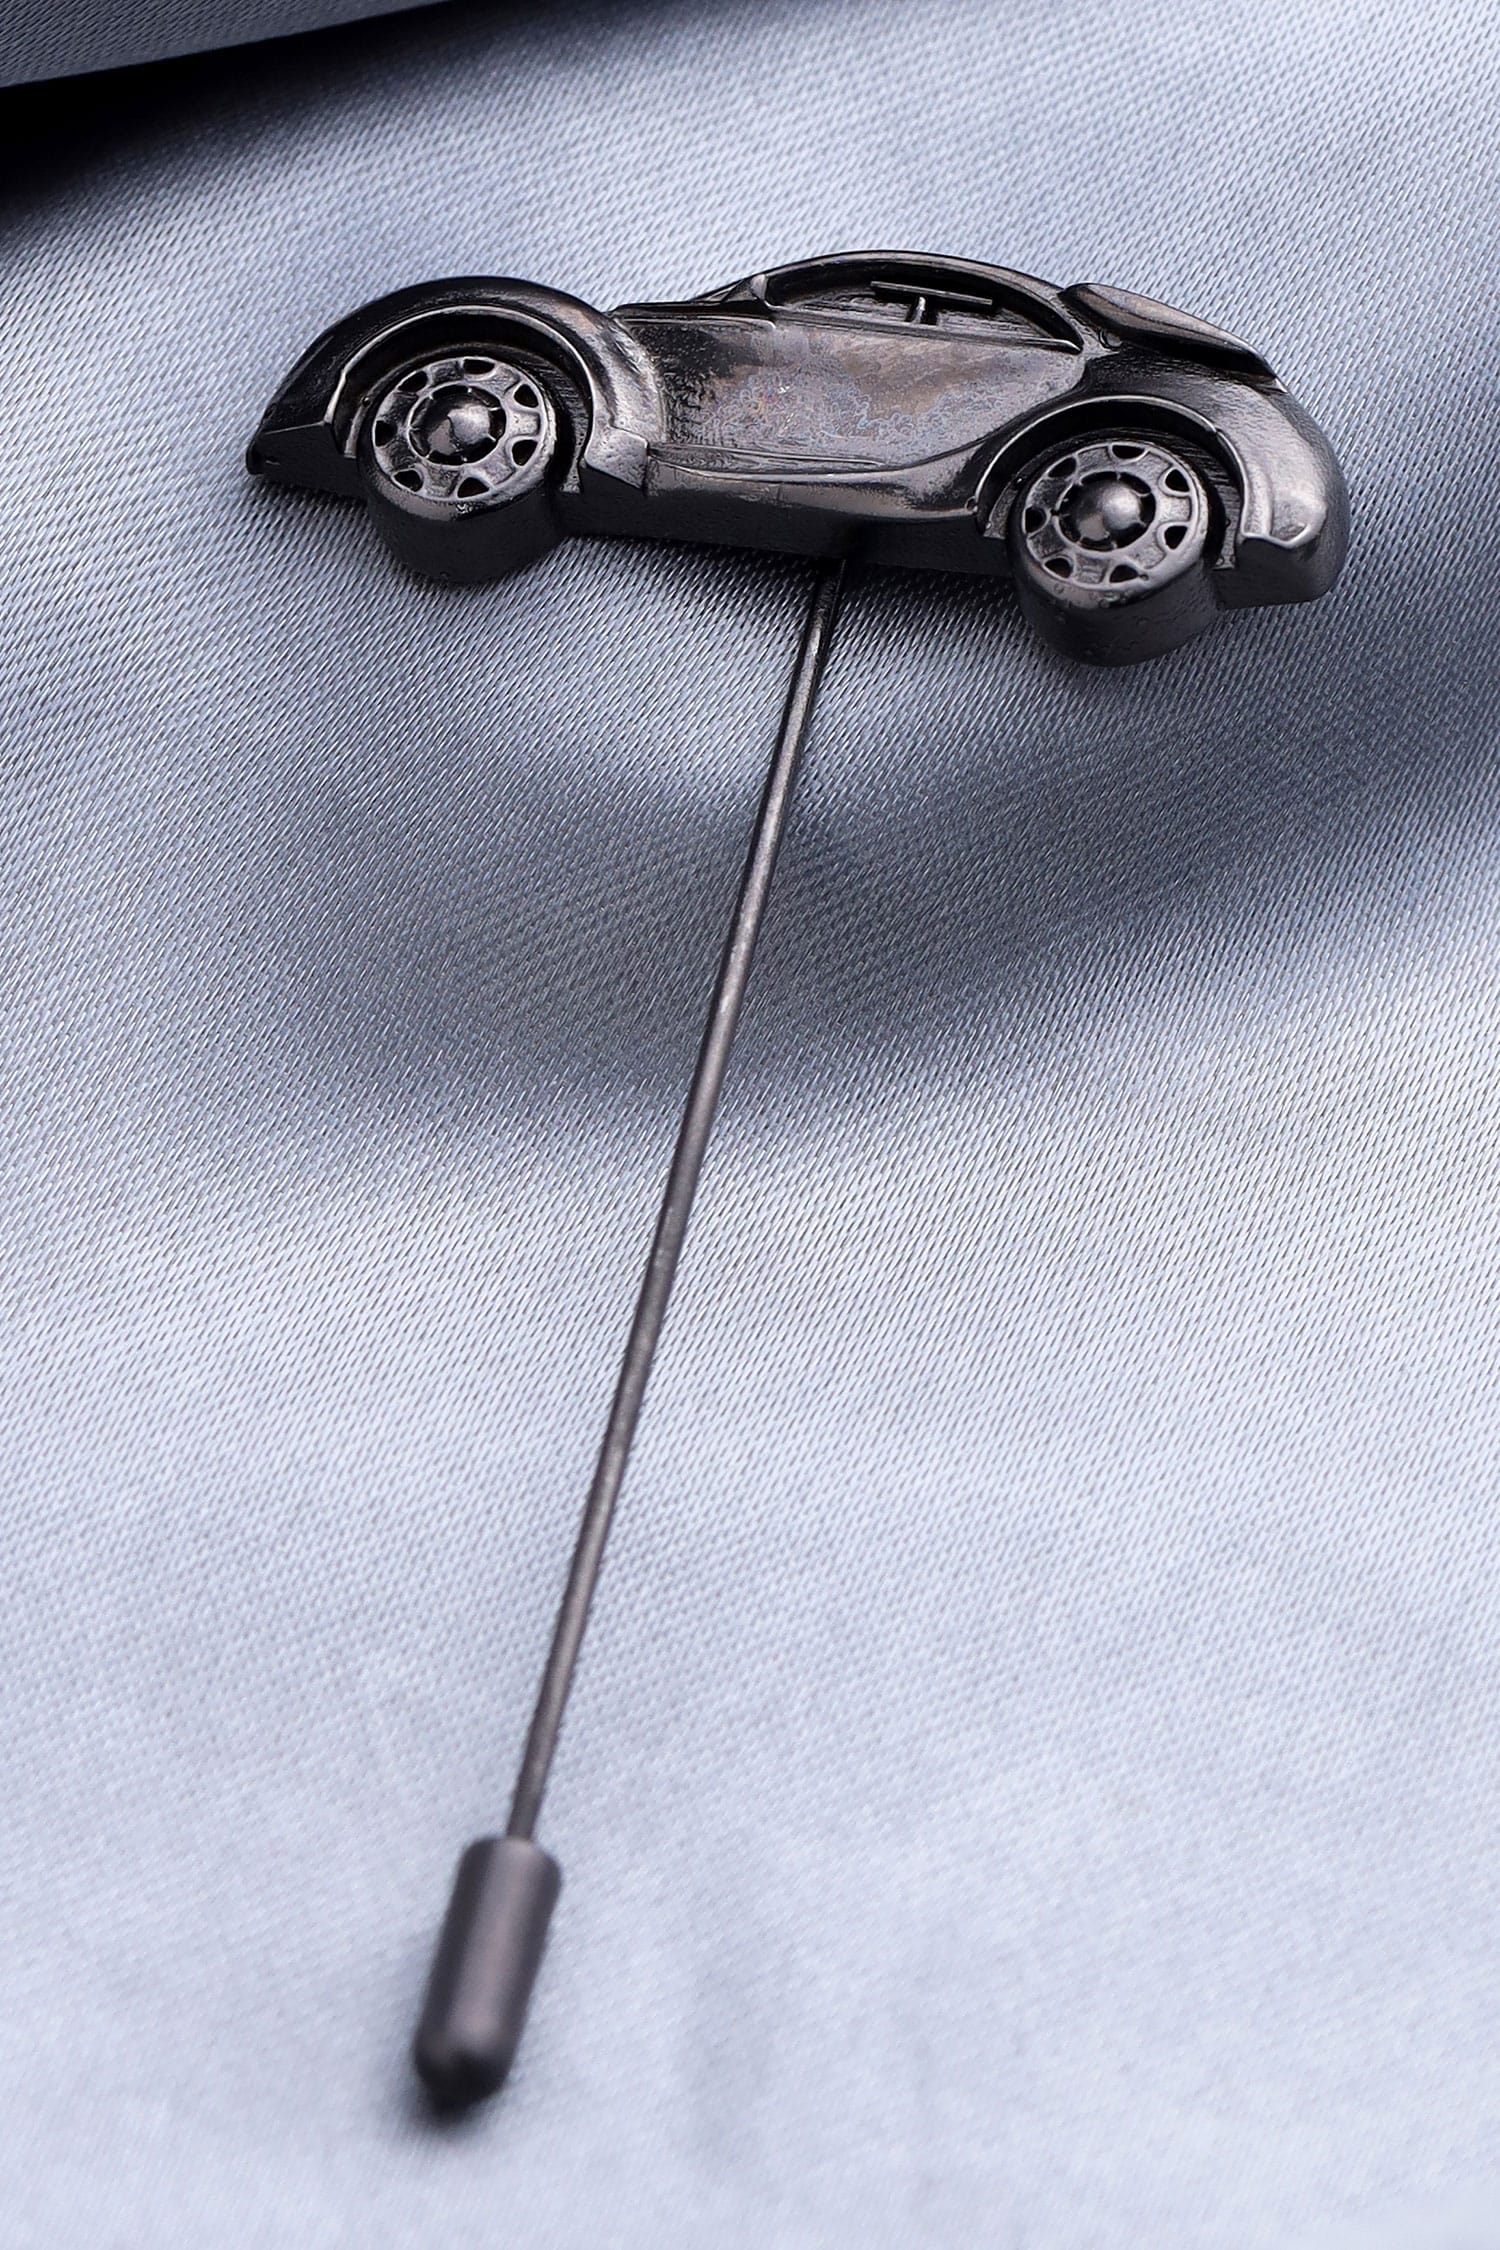 Cosa Nostraa Black Car Power Brass Lapel Pin